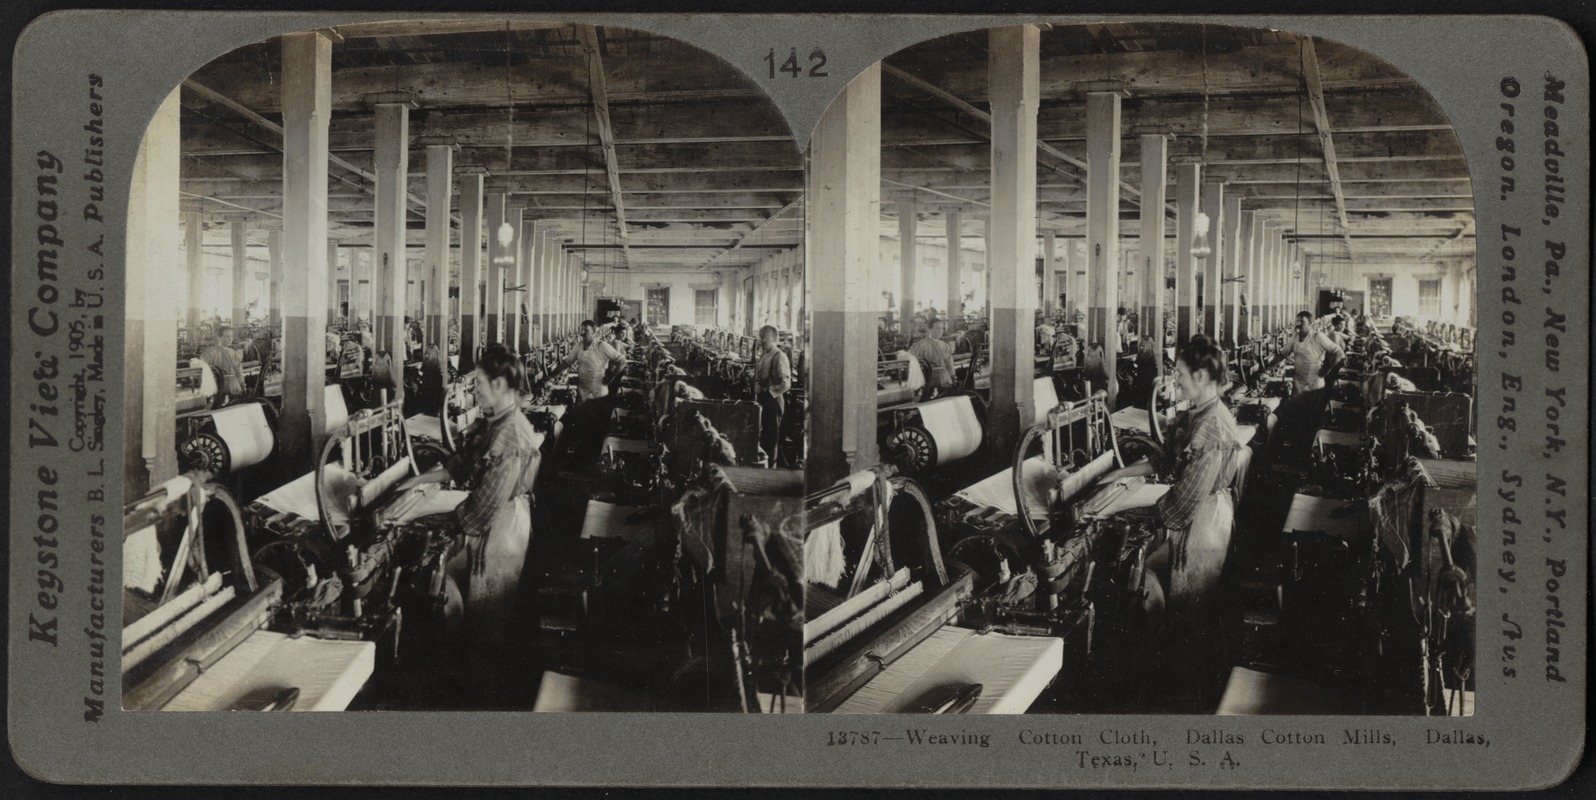 Weaving cotton cloth, Dallas, Texas, U.S.A.